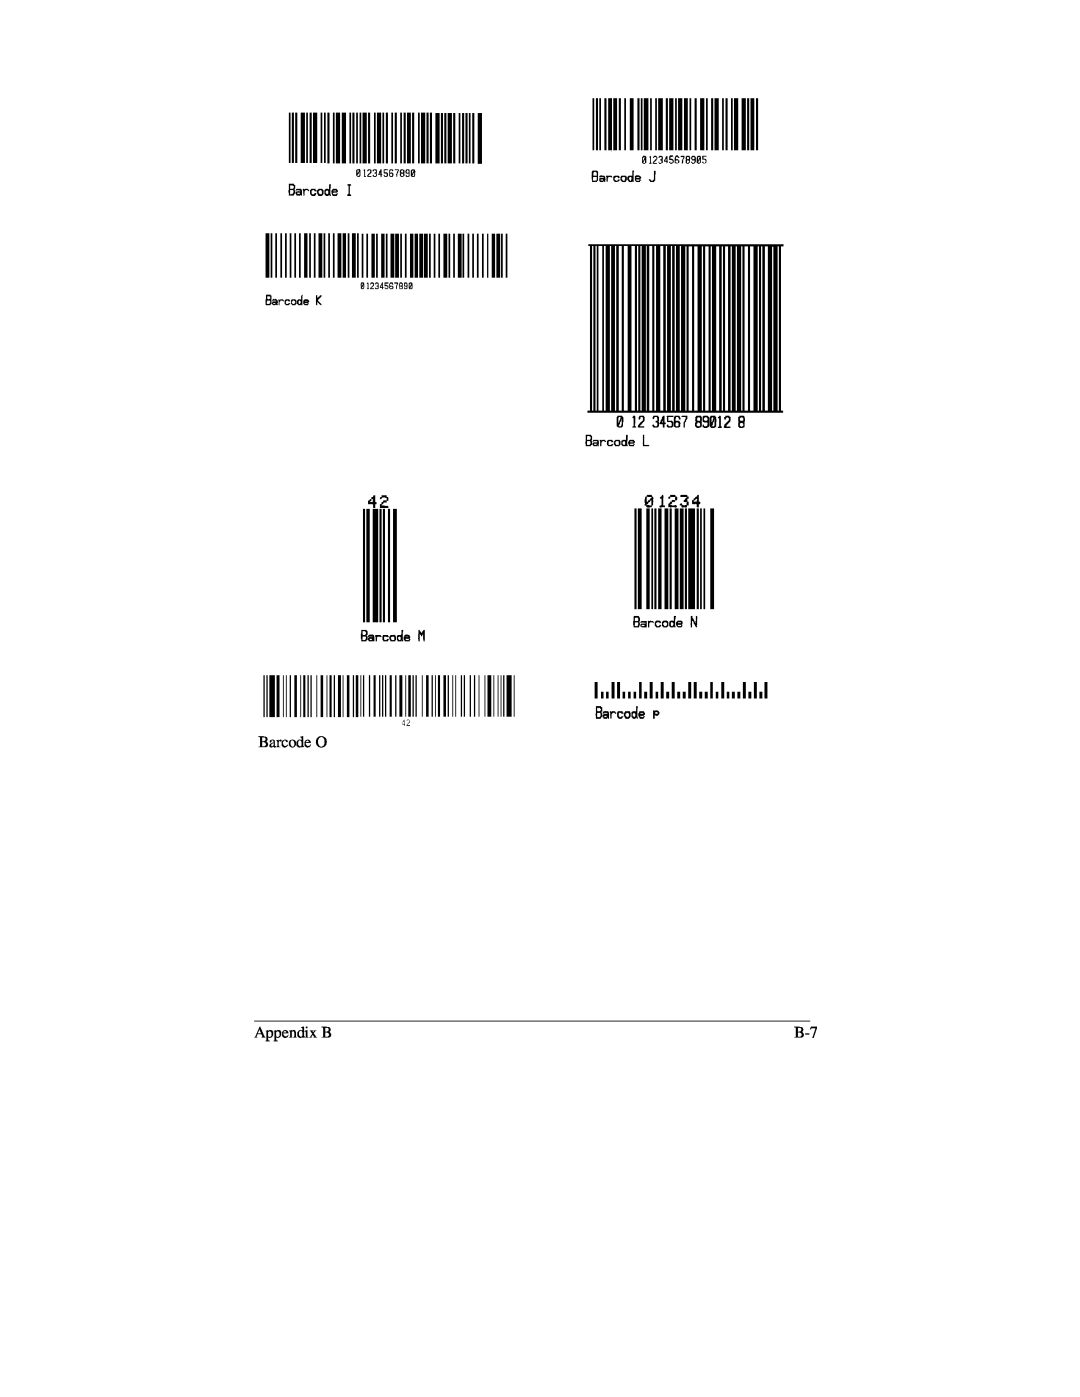 Brady 2034, 2024 manual Barcode O, Appendix B 